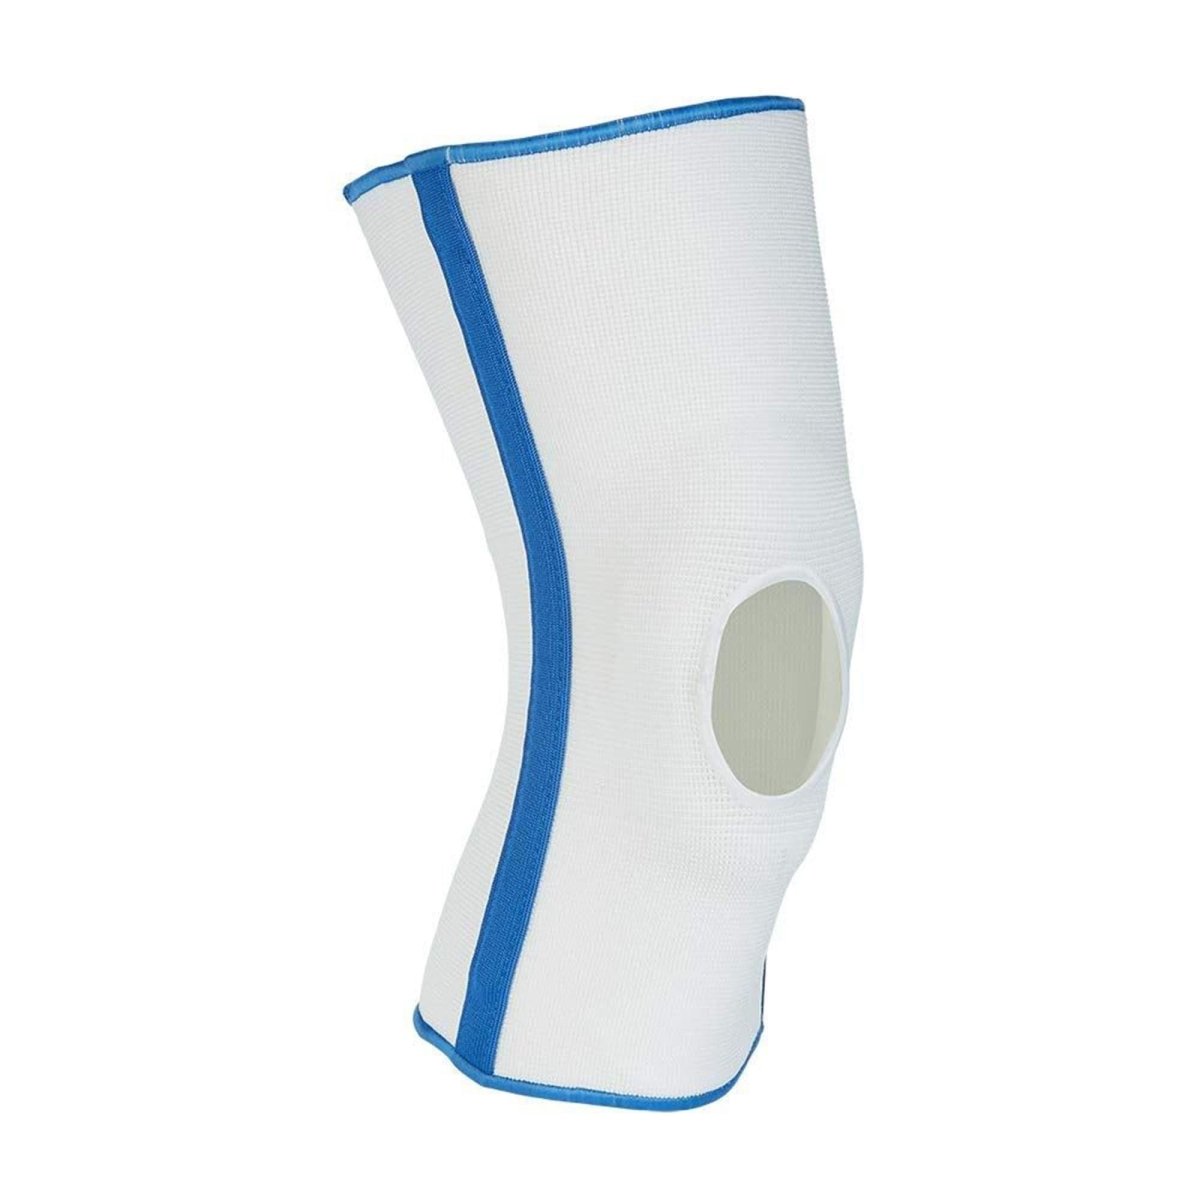 Ossur Premium Elastic Knee Brace - 129603-S - Brace Direct